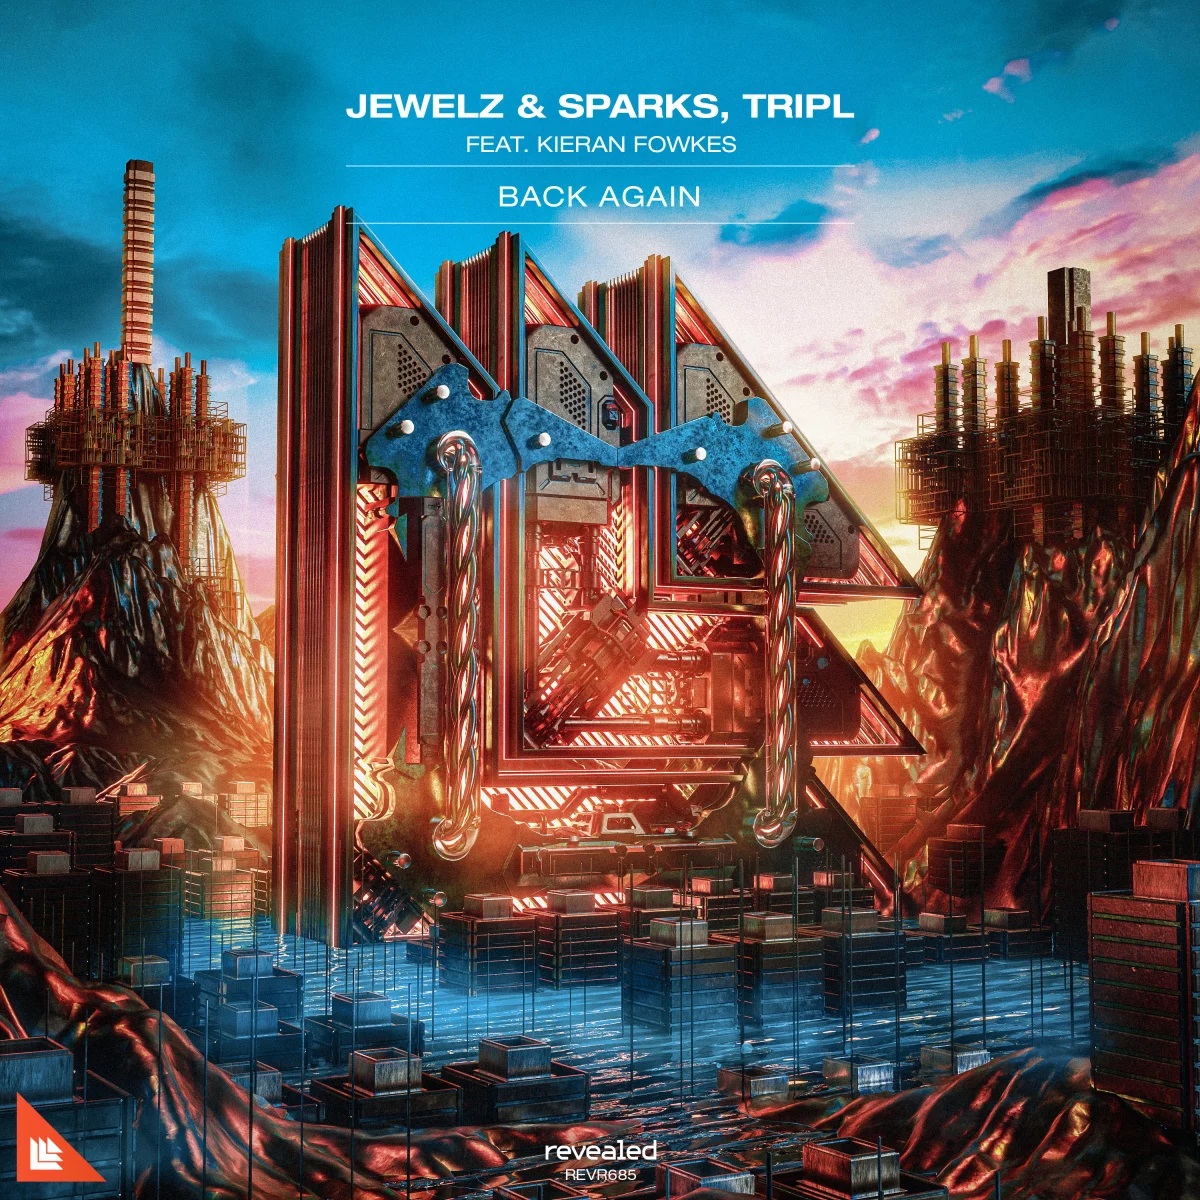 Back Again - Jewelz & Sparks⁠, TripL⁠ feat. Kieran Fowkes⁠